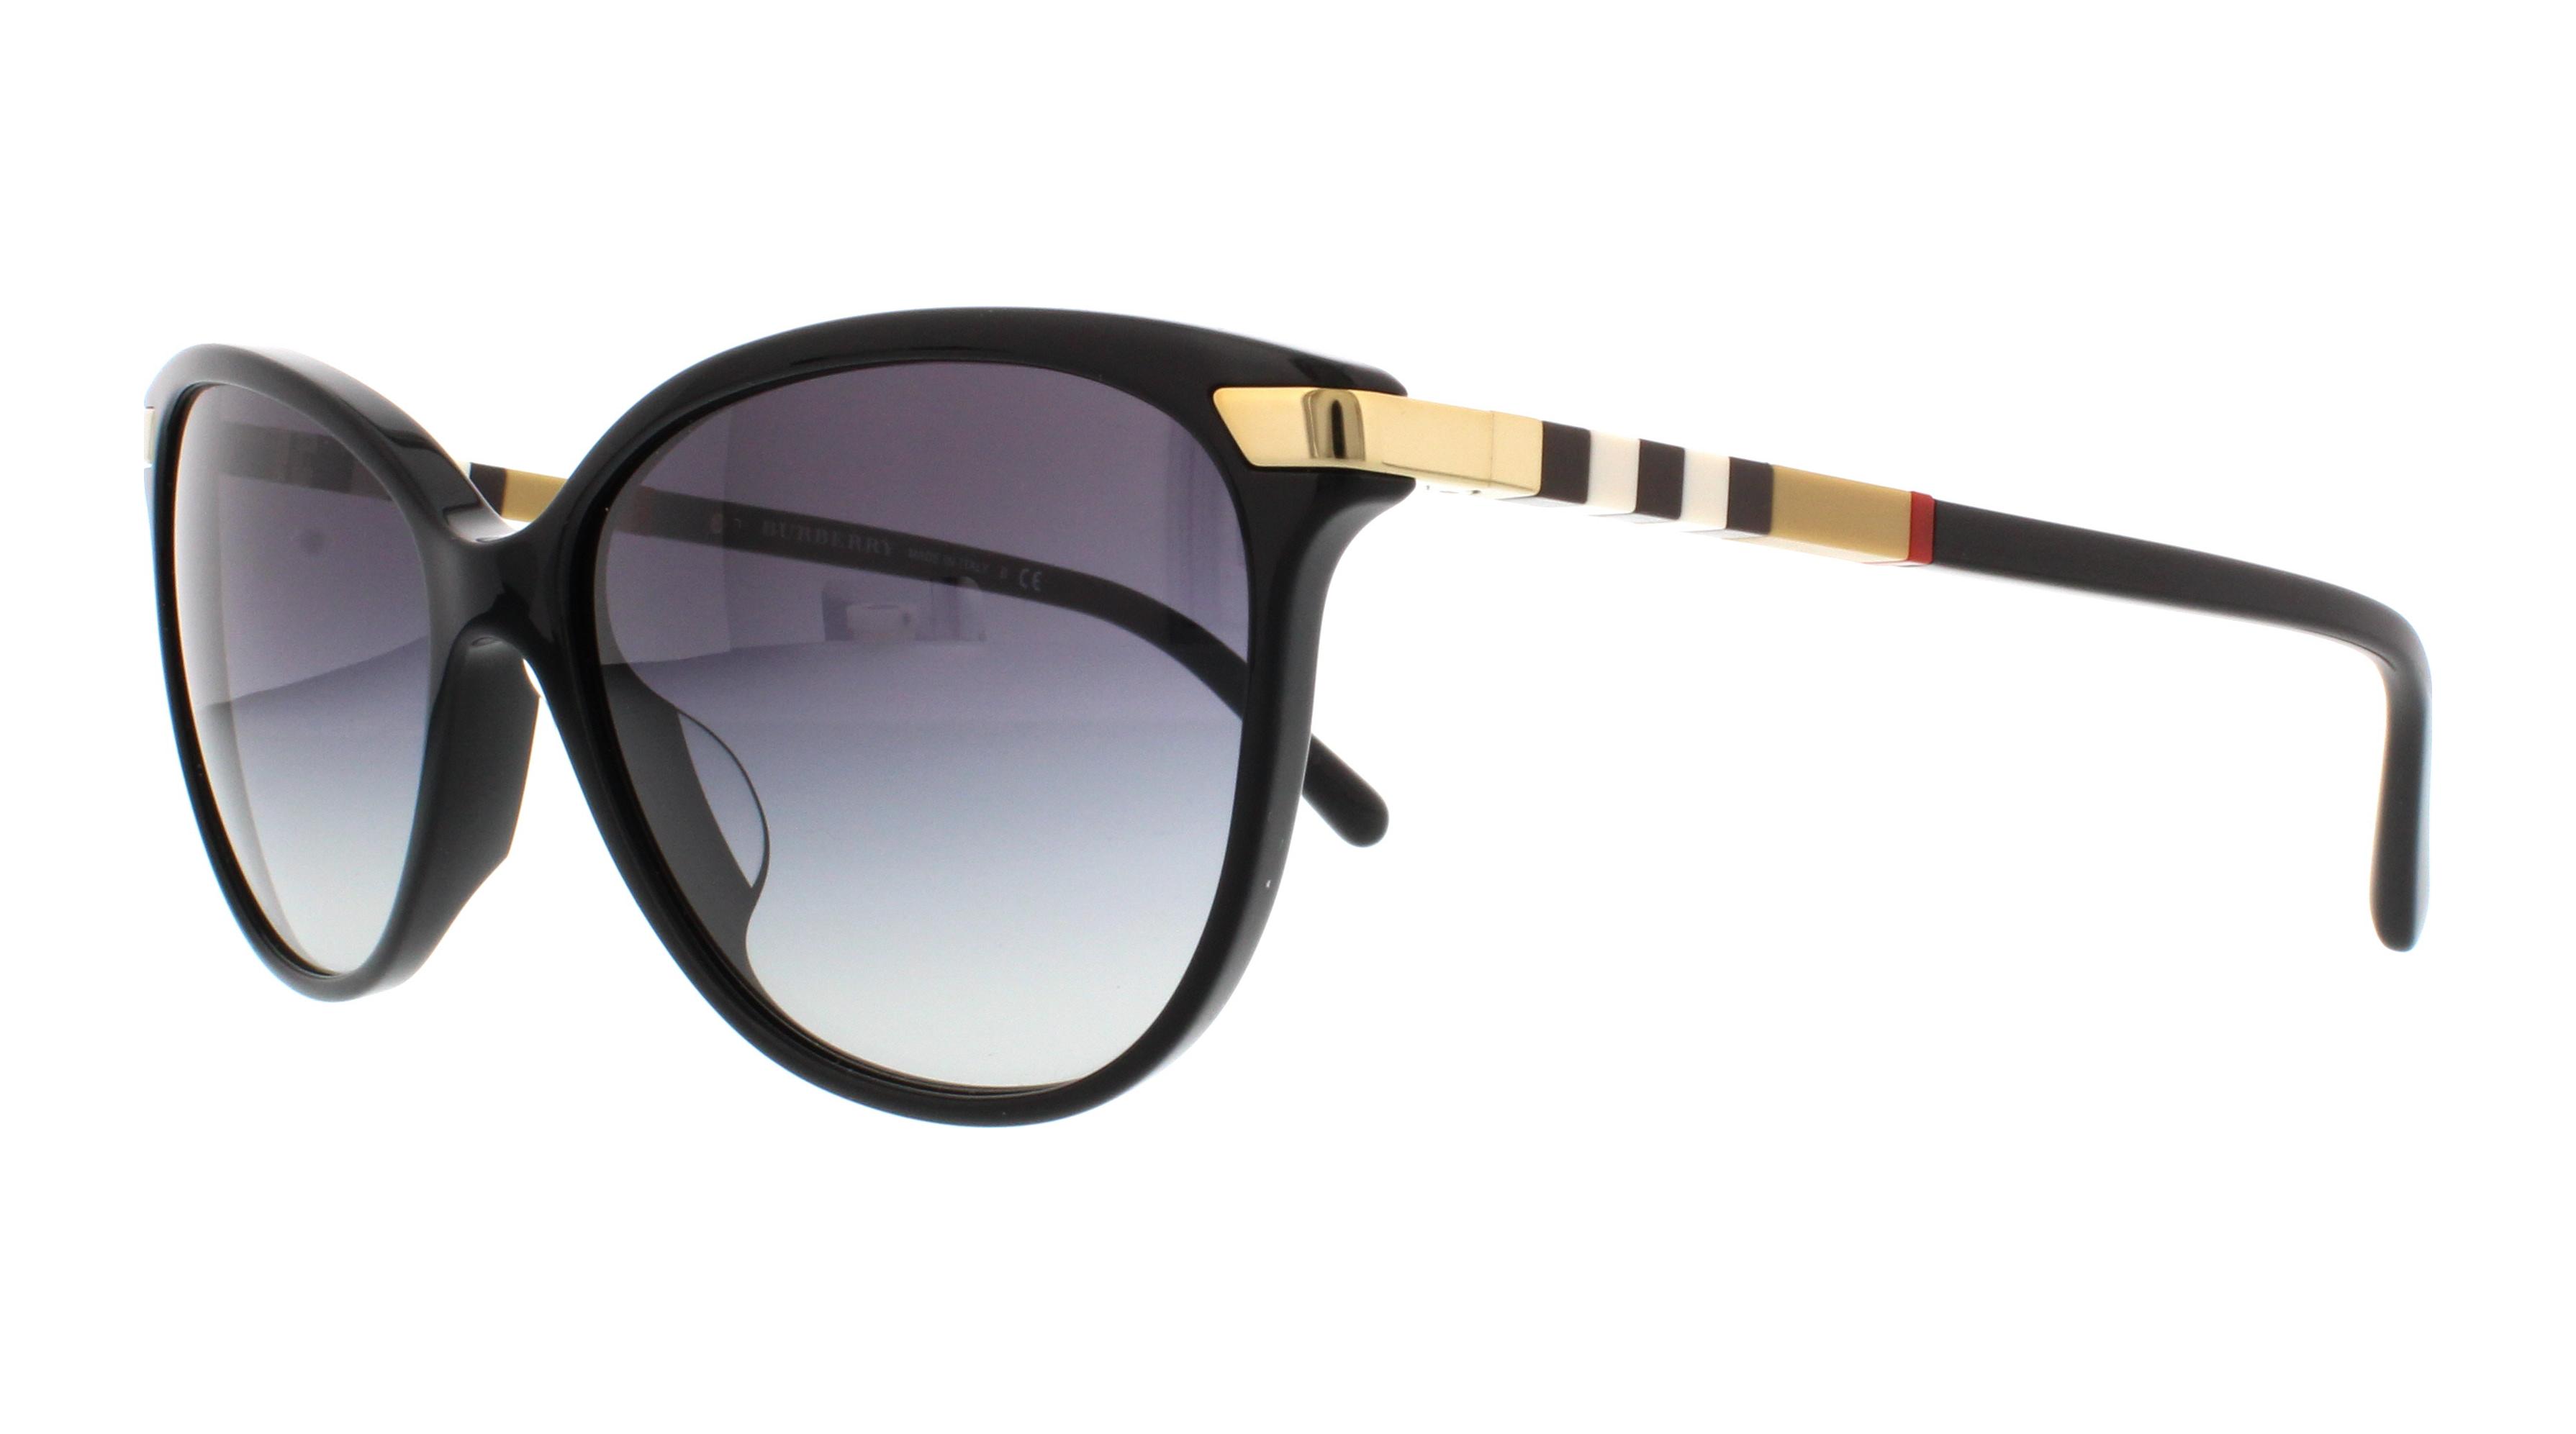 burberry sunglasses b4216